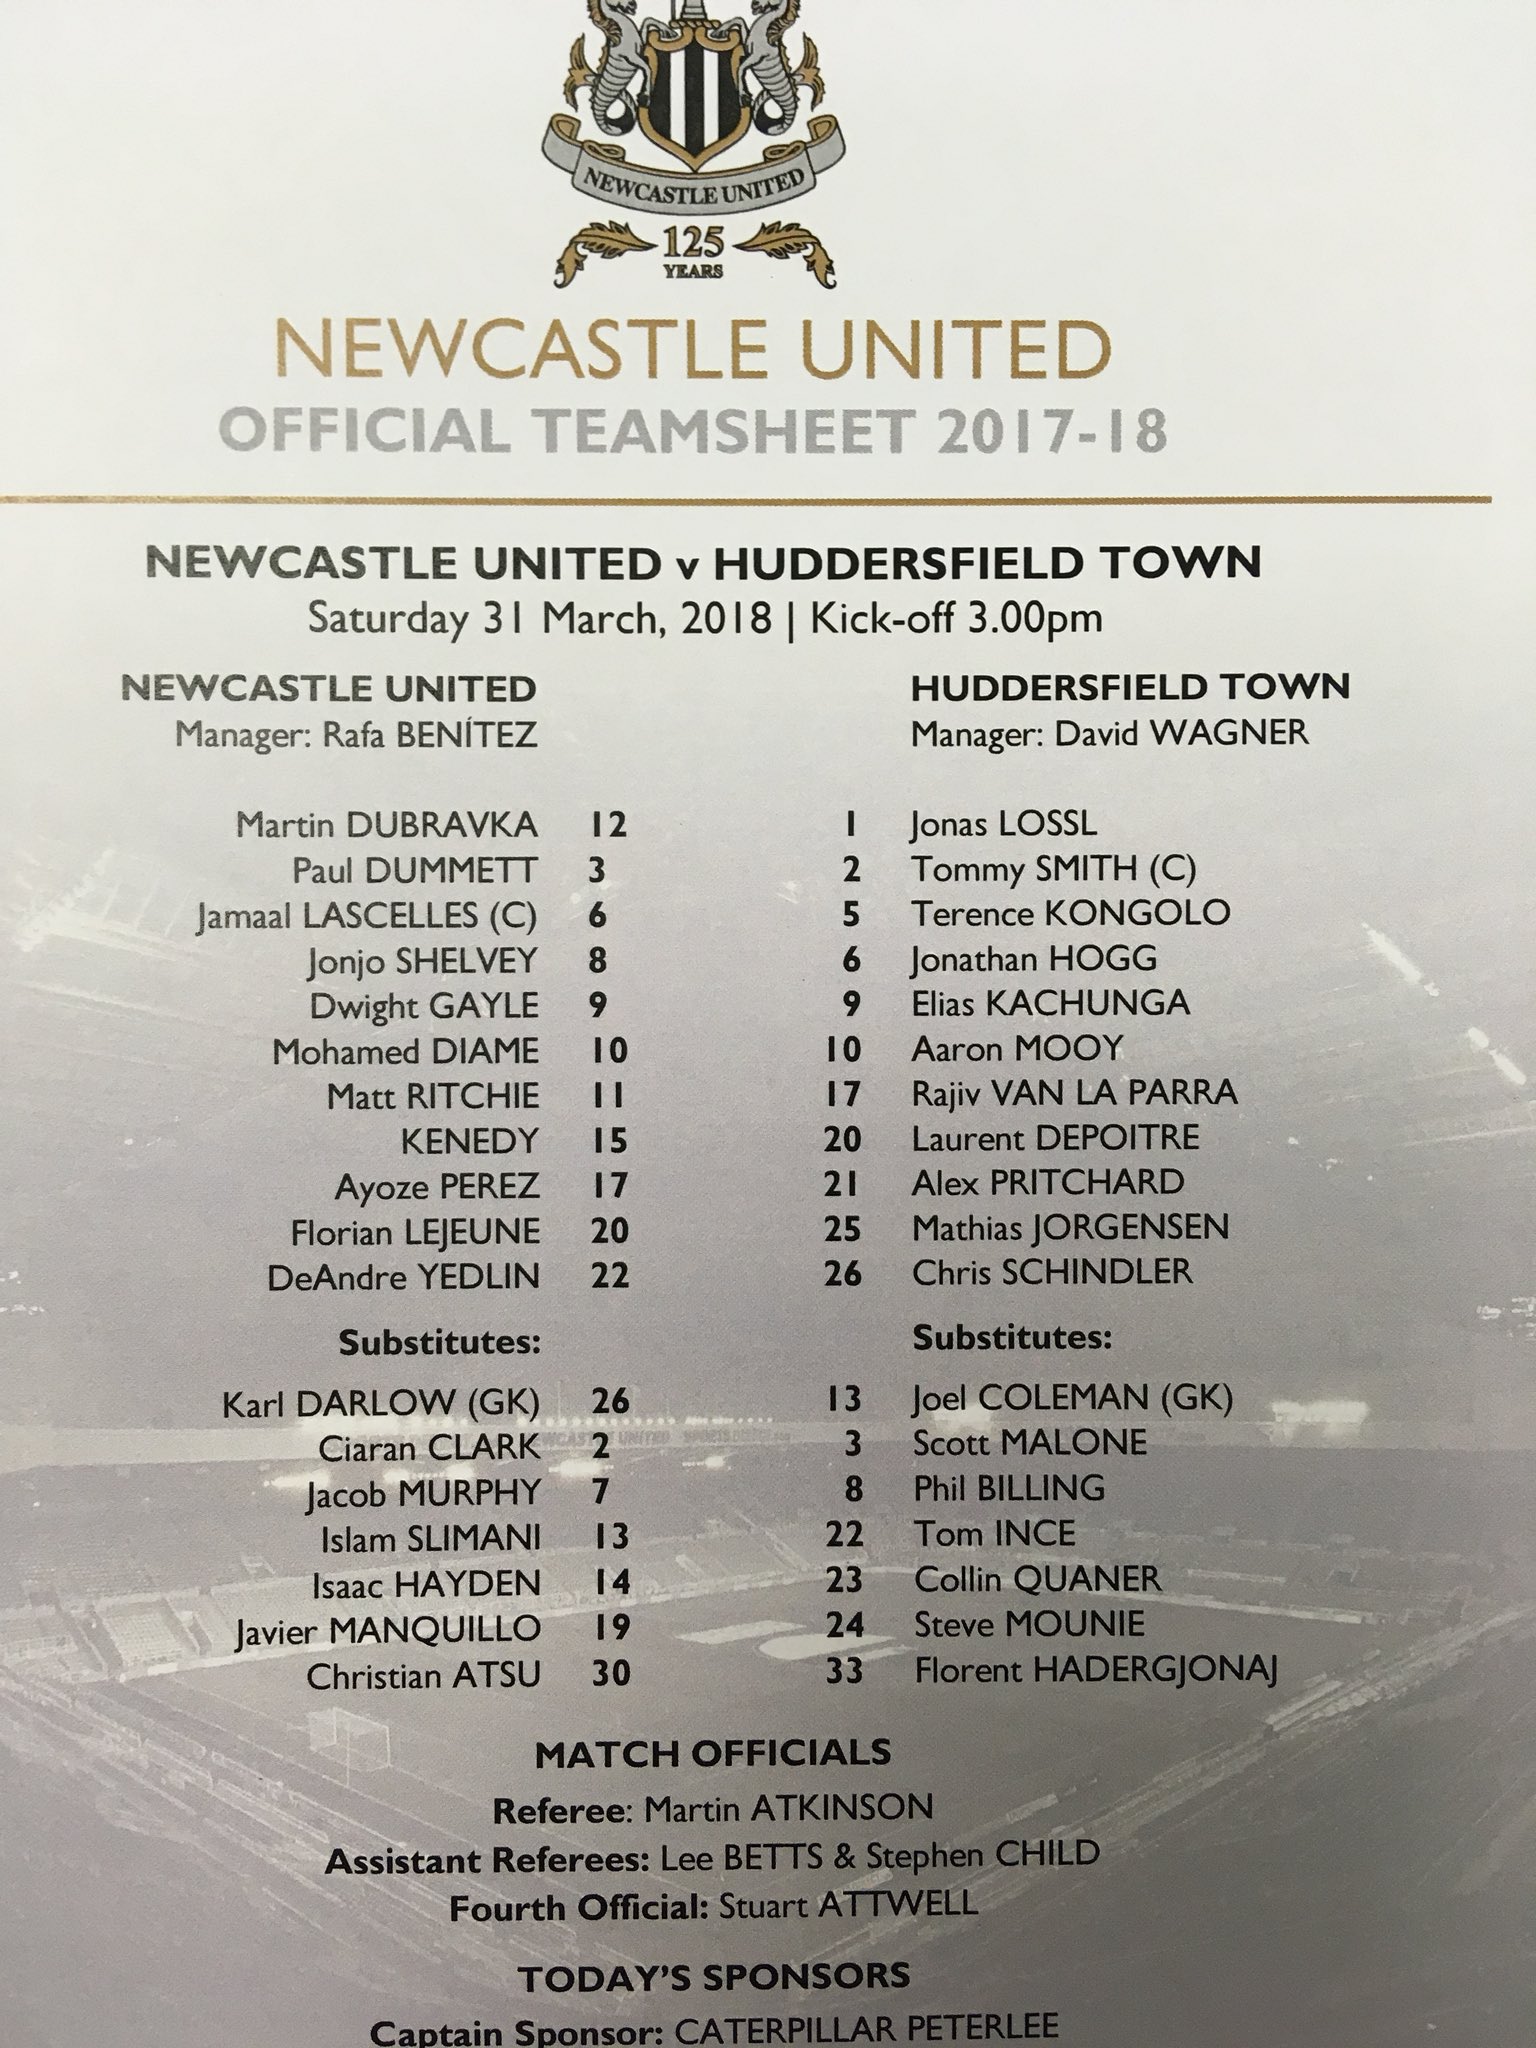 Newcastle - Huddersfield 1:0 DZnnI-wW0AARYt6